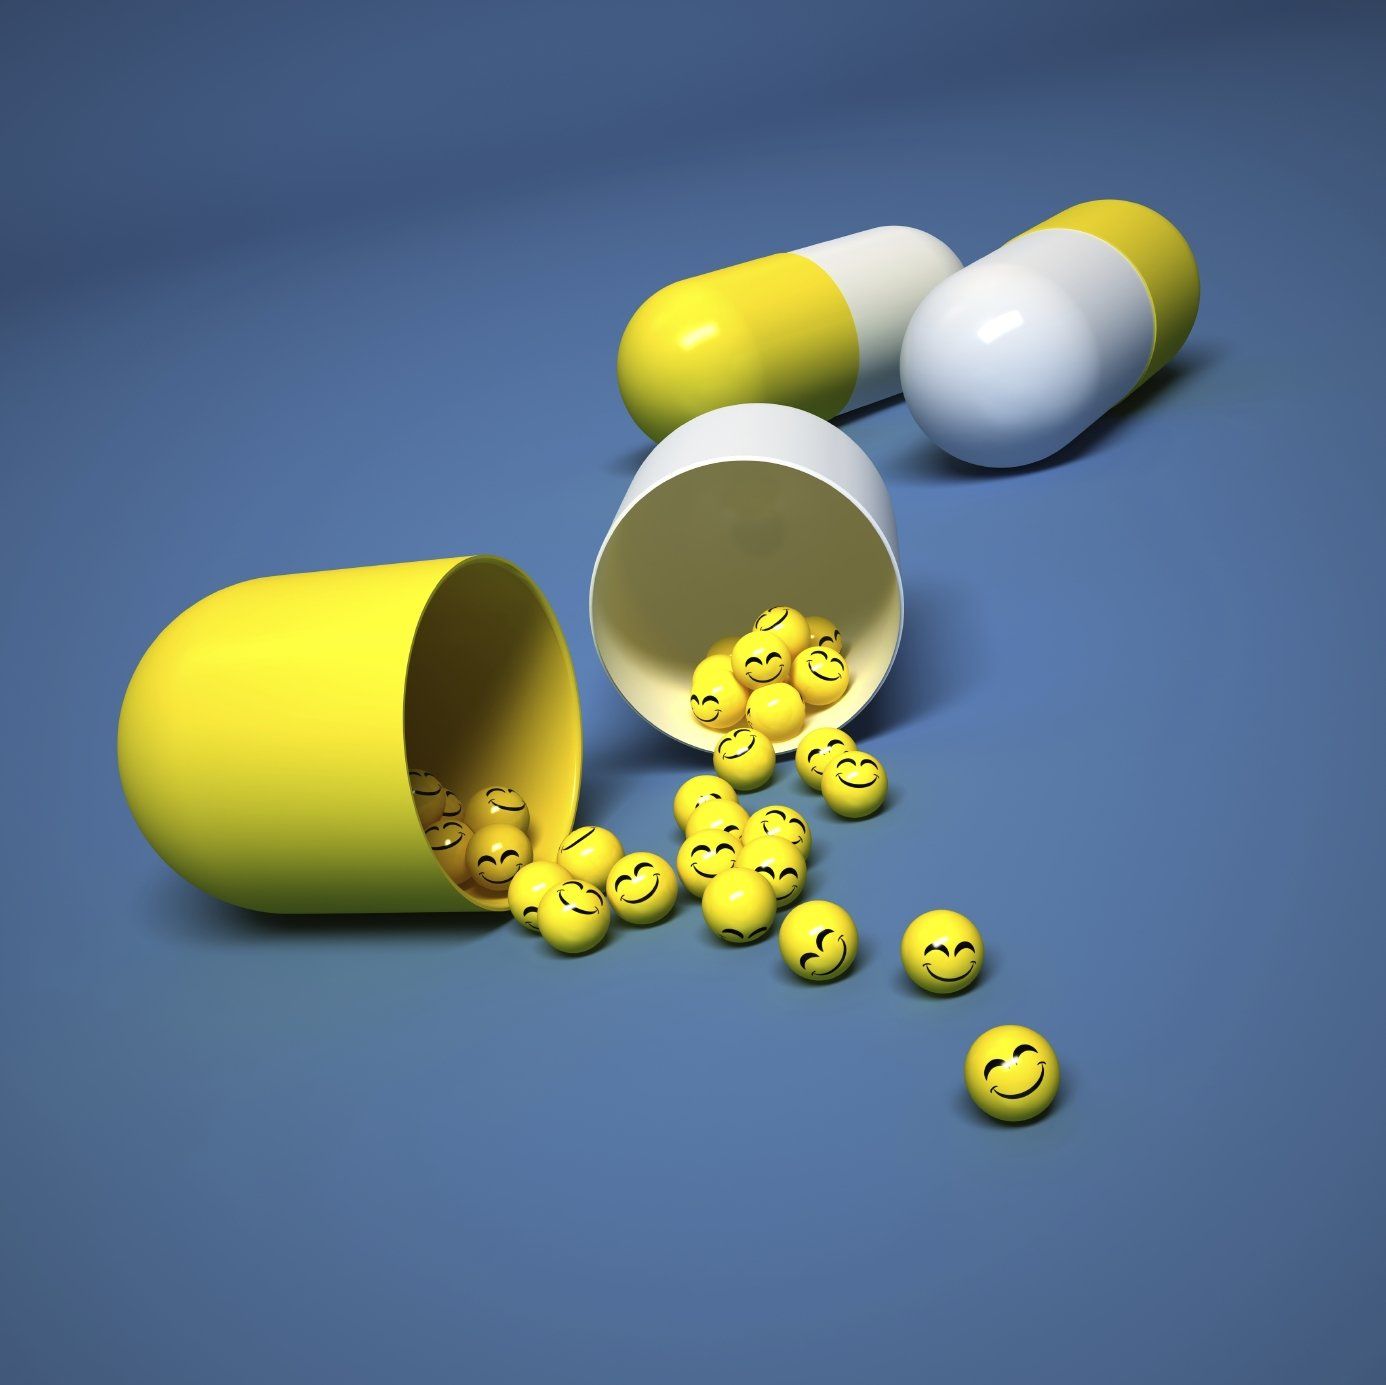 Yellow and white medicine capsule